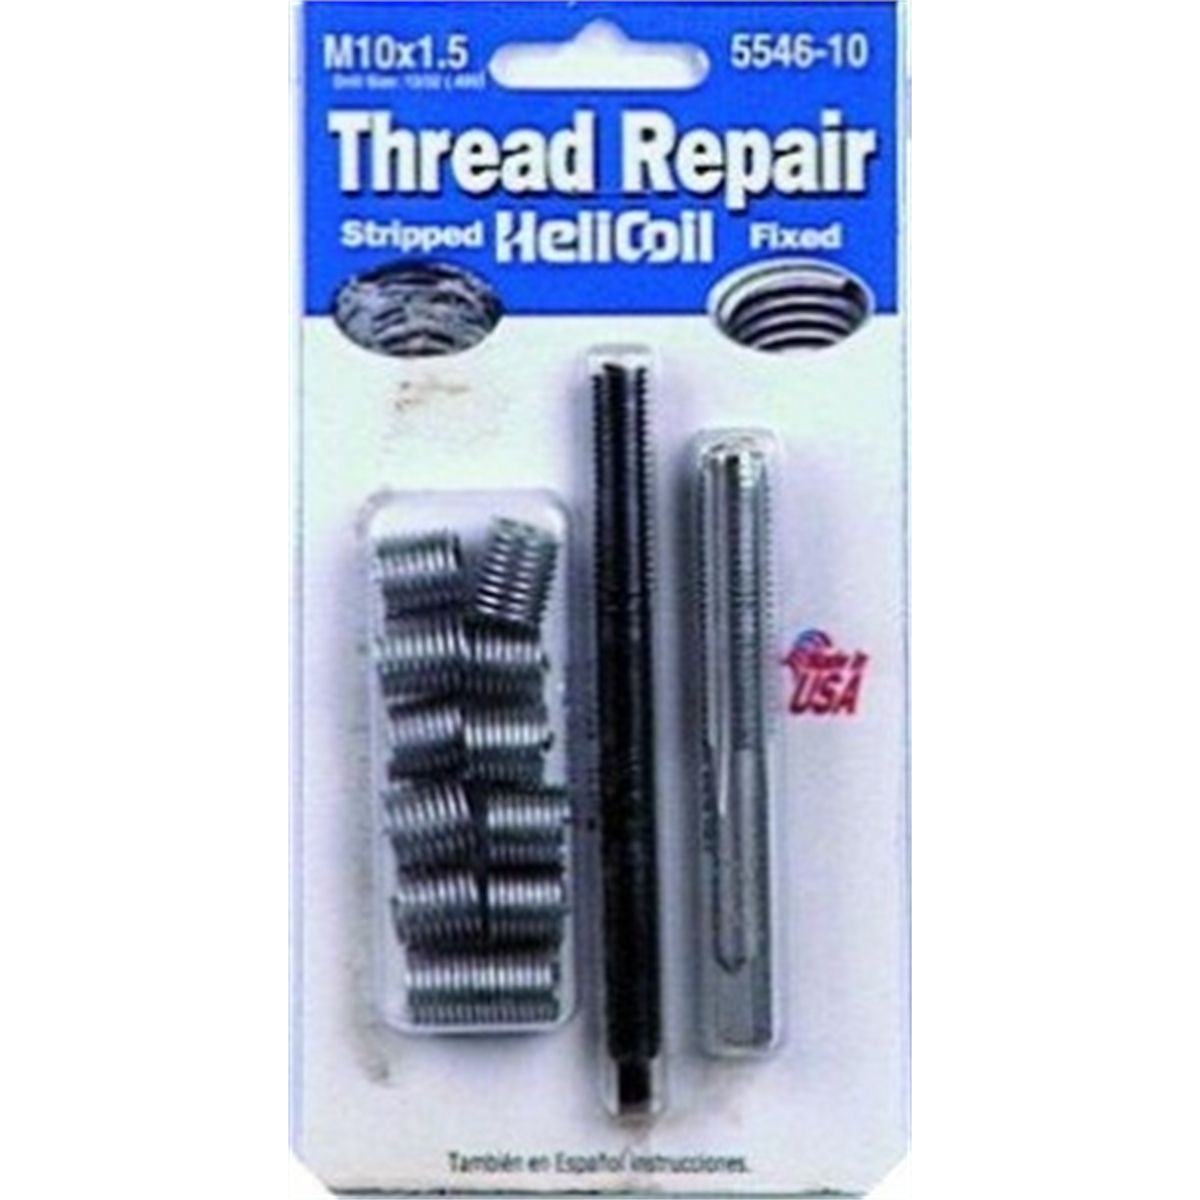 Perma Coil 1221-310 Metric Thread Repair Insert Kit M10x1.5 Helicoil 5546-10 